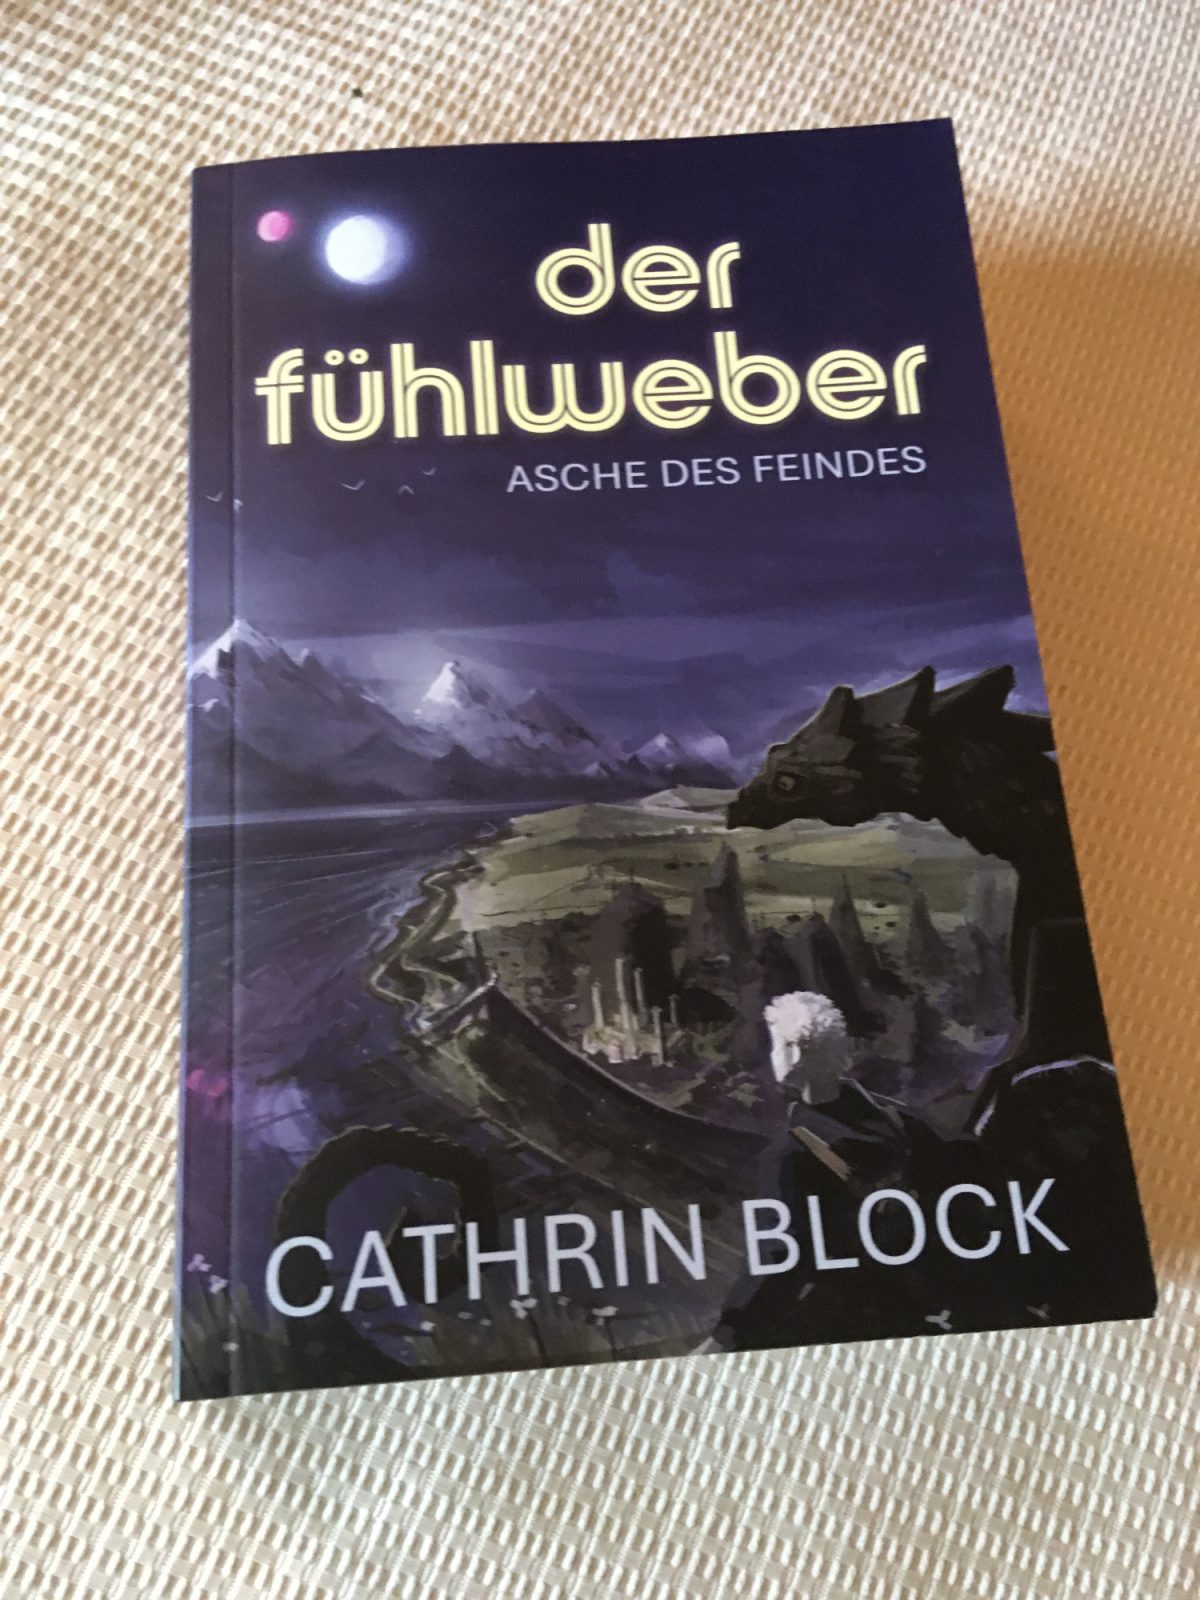 (c) Cathrinblock.de